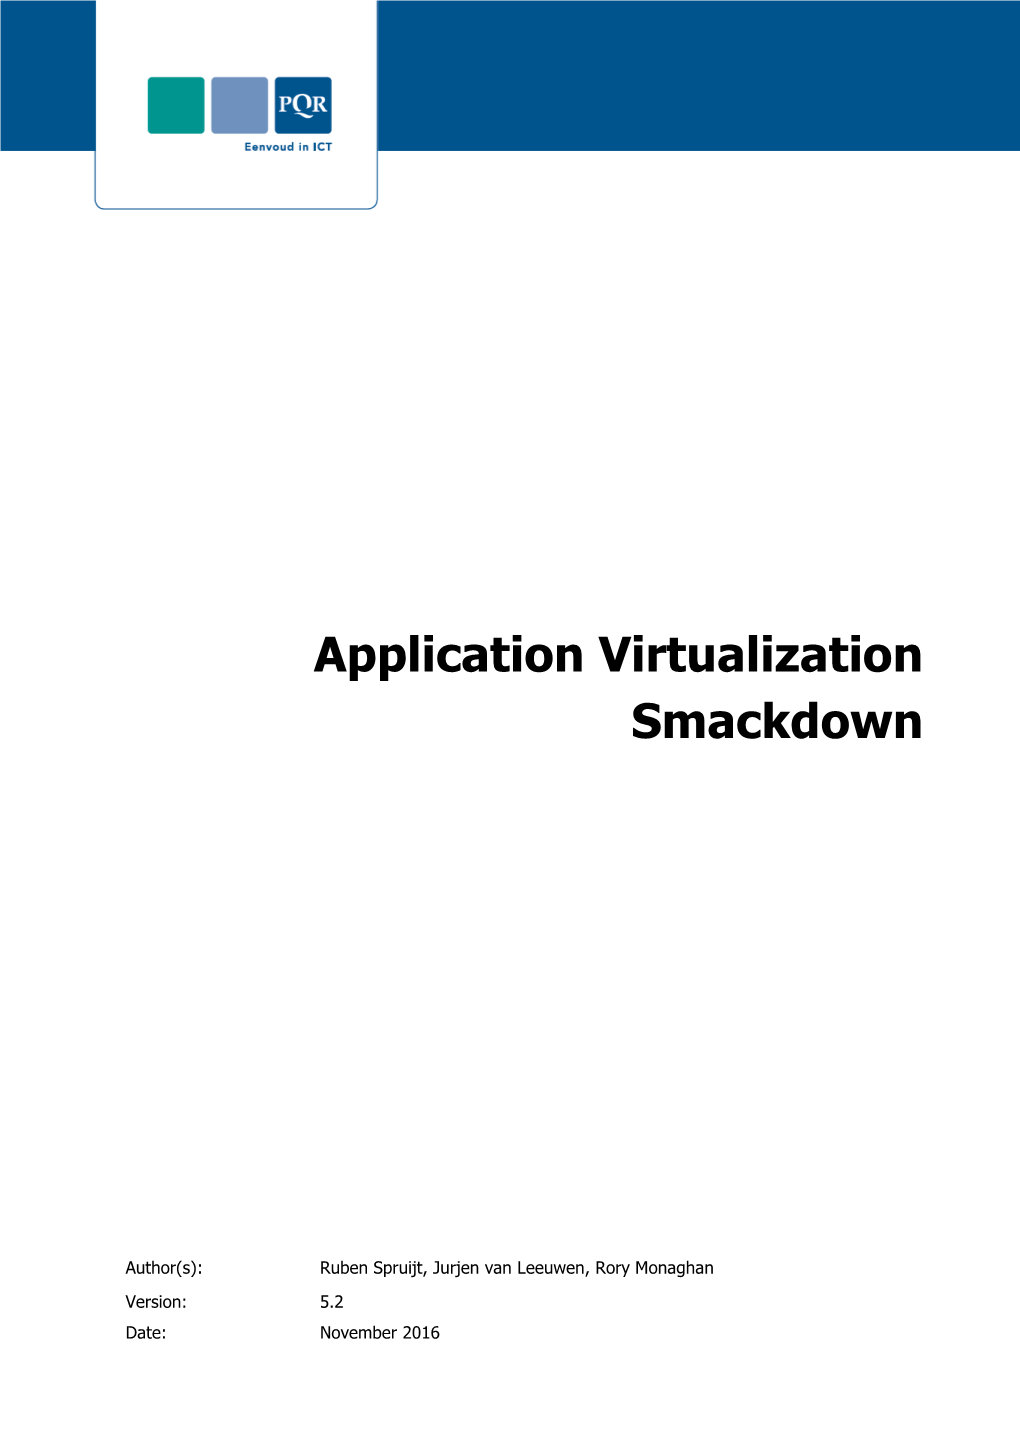 Application Virtualization Smackdown